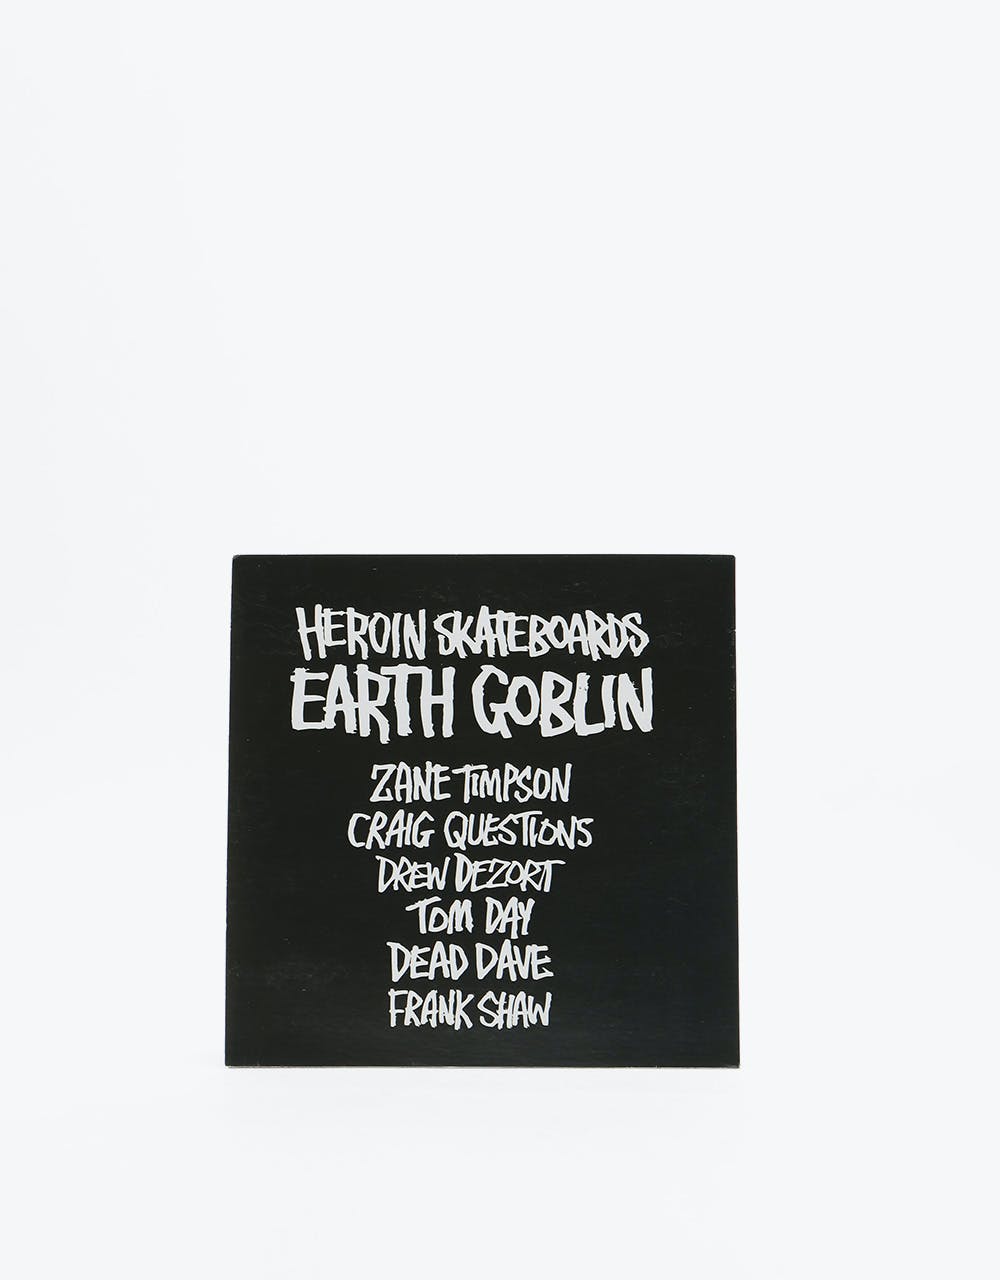 Heroin Earth Goblin DVD